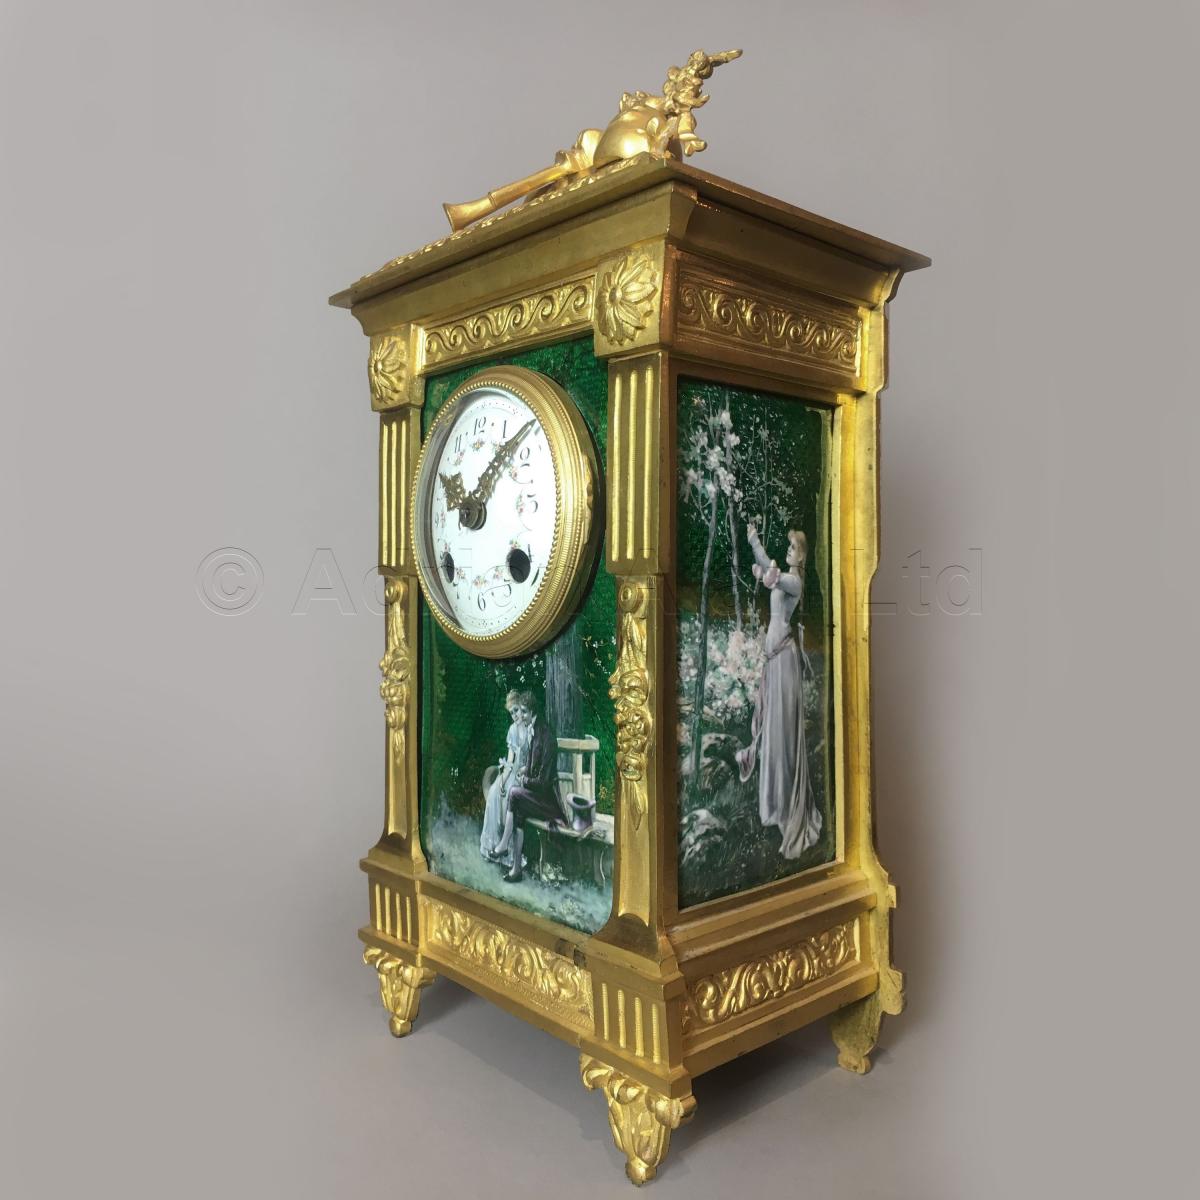 A Fine Louis XVI Style Gilt-Bronze and Green Enamel Mantel Clock